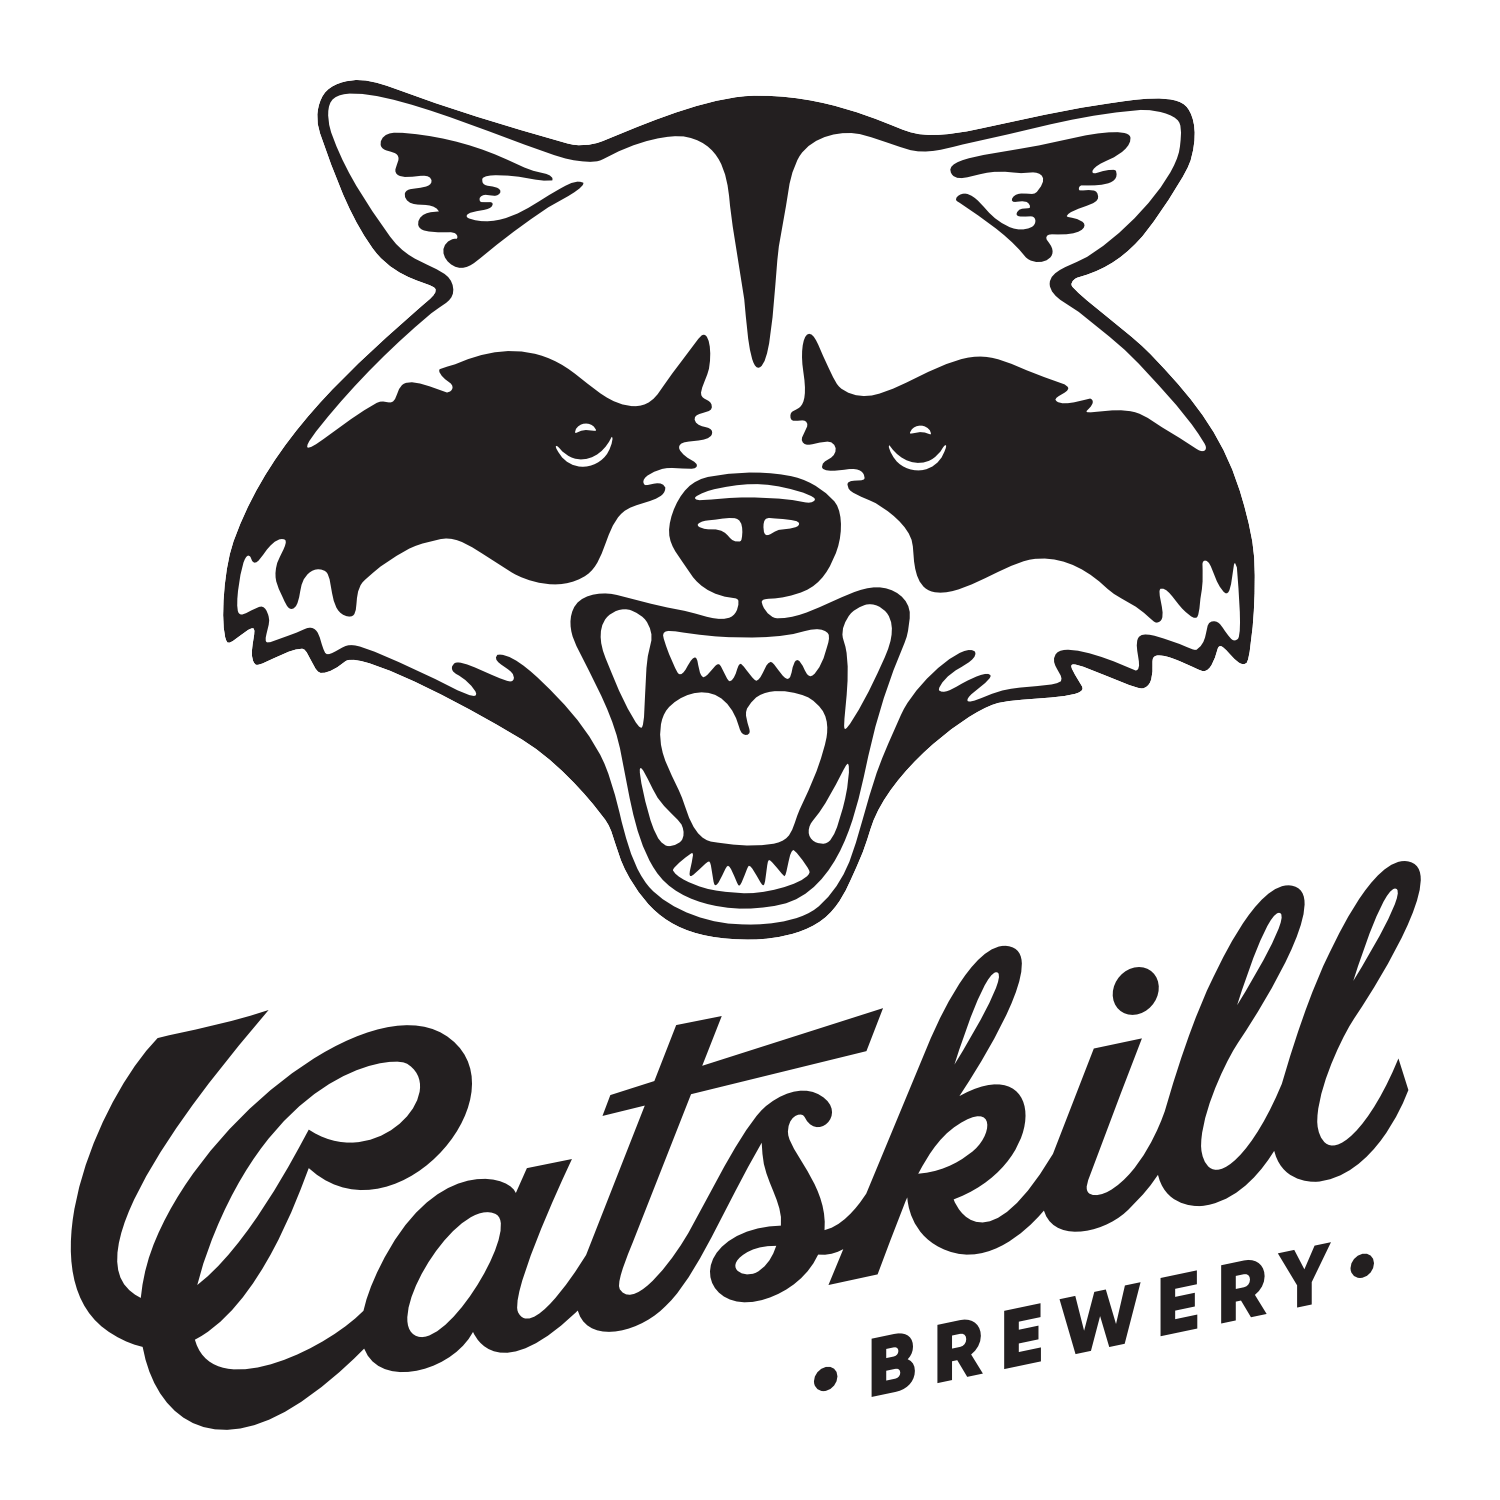 Catskills Brewery